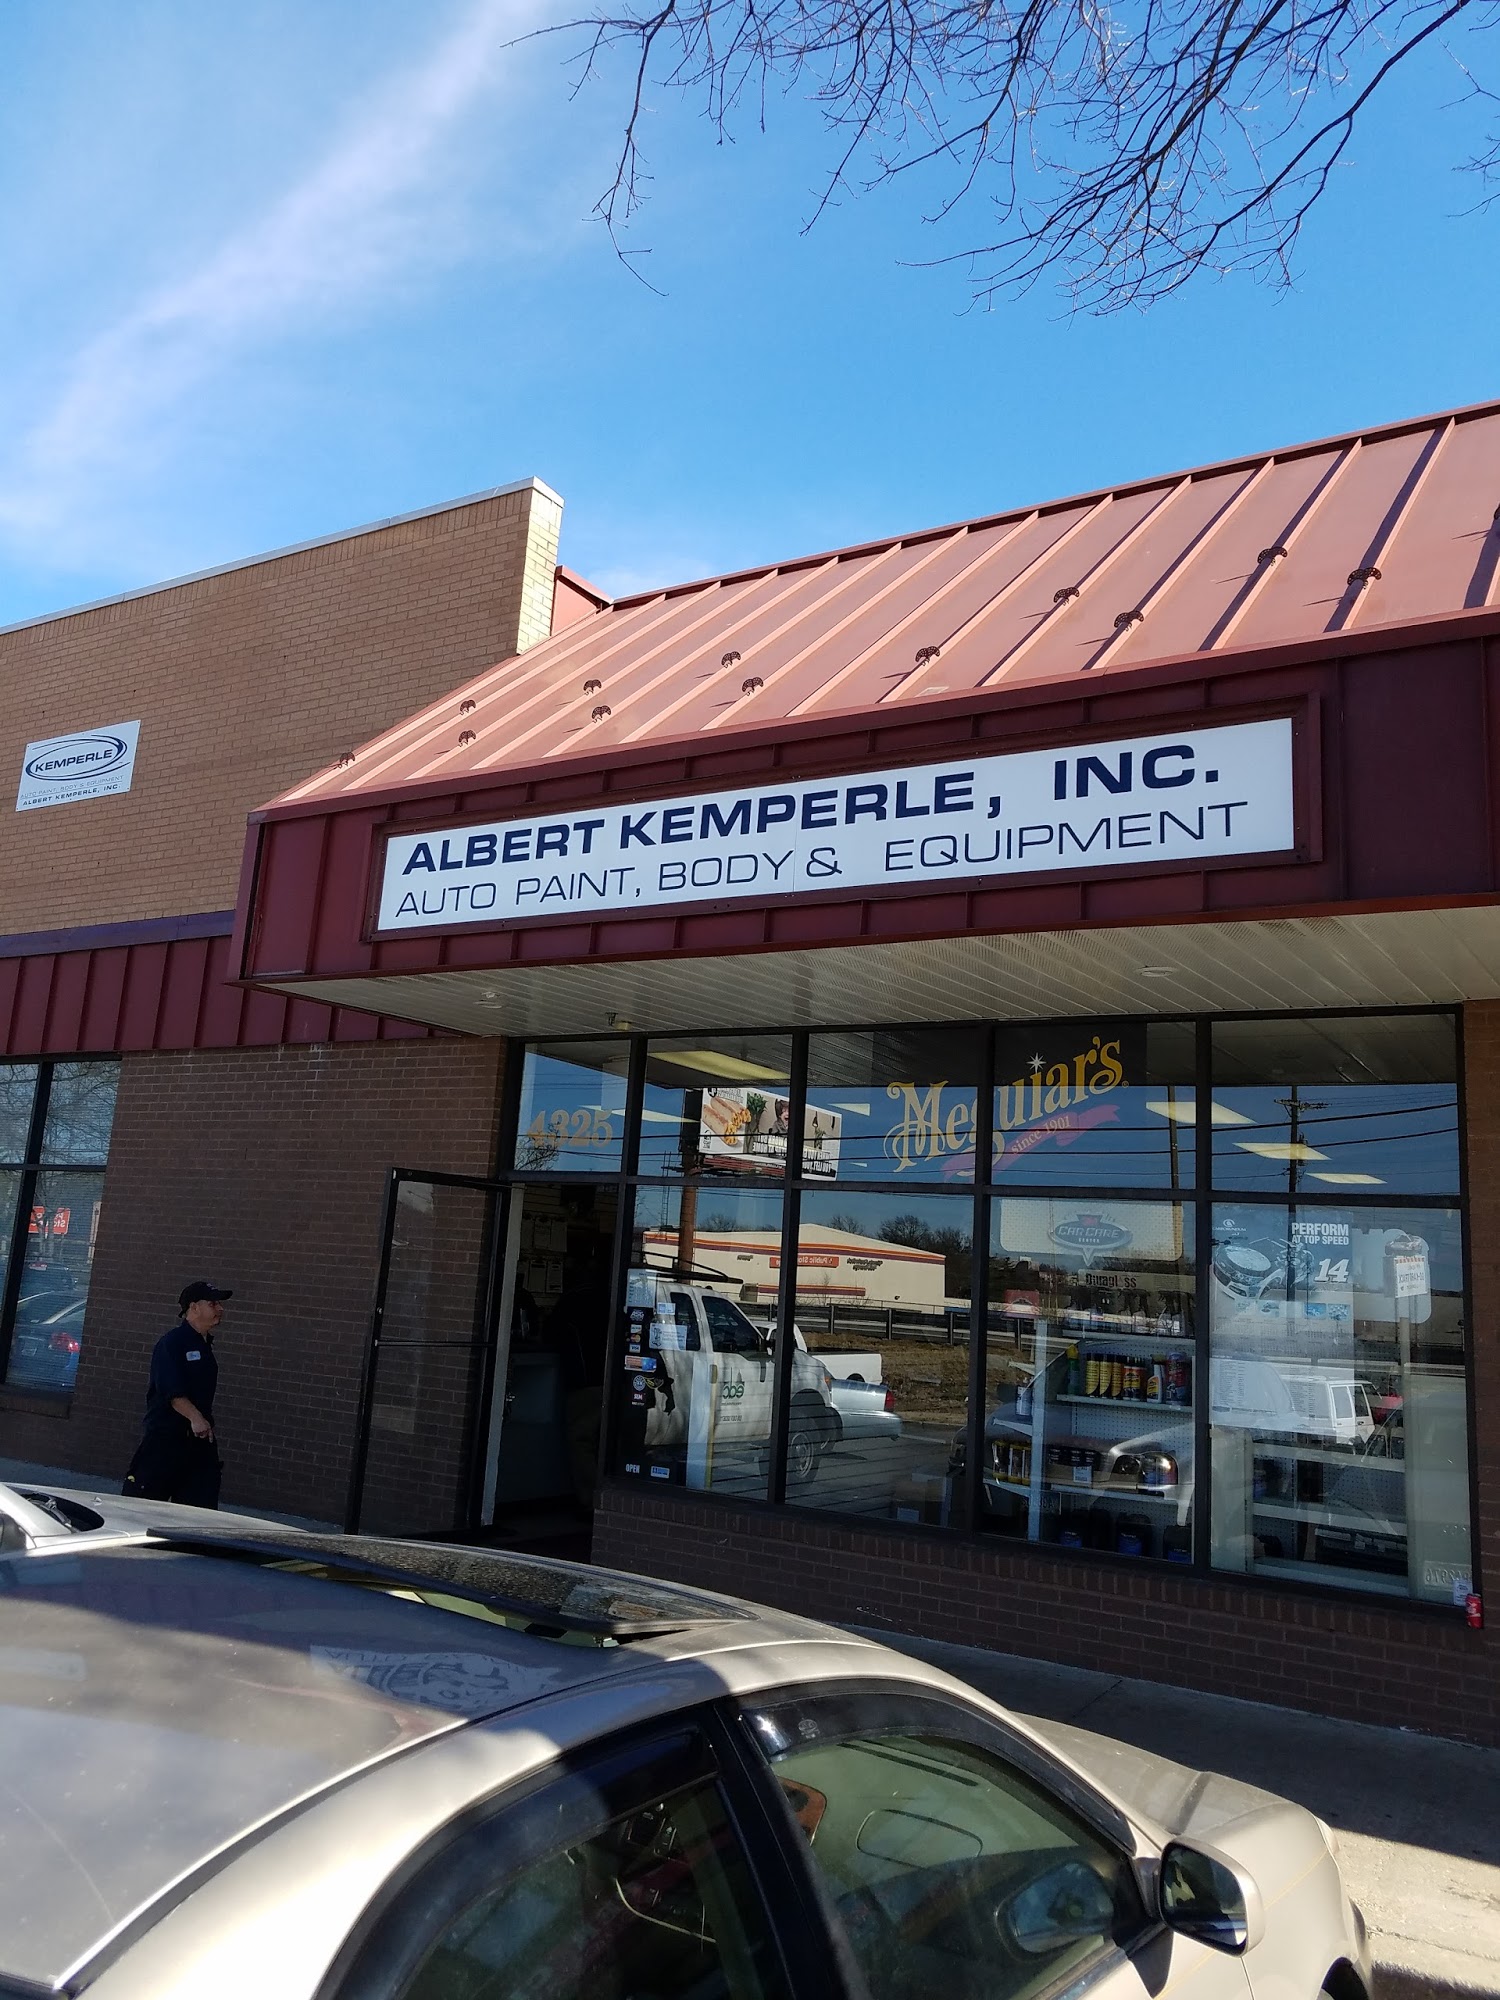 Albert Kemperle LLC, Auto Paint, Body & Equipment